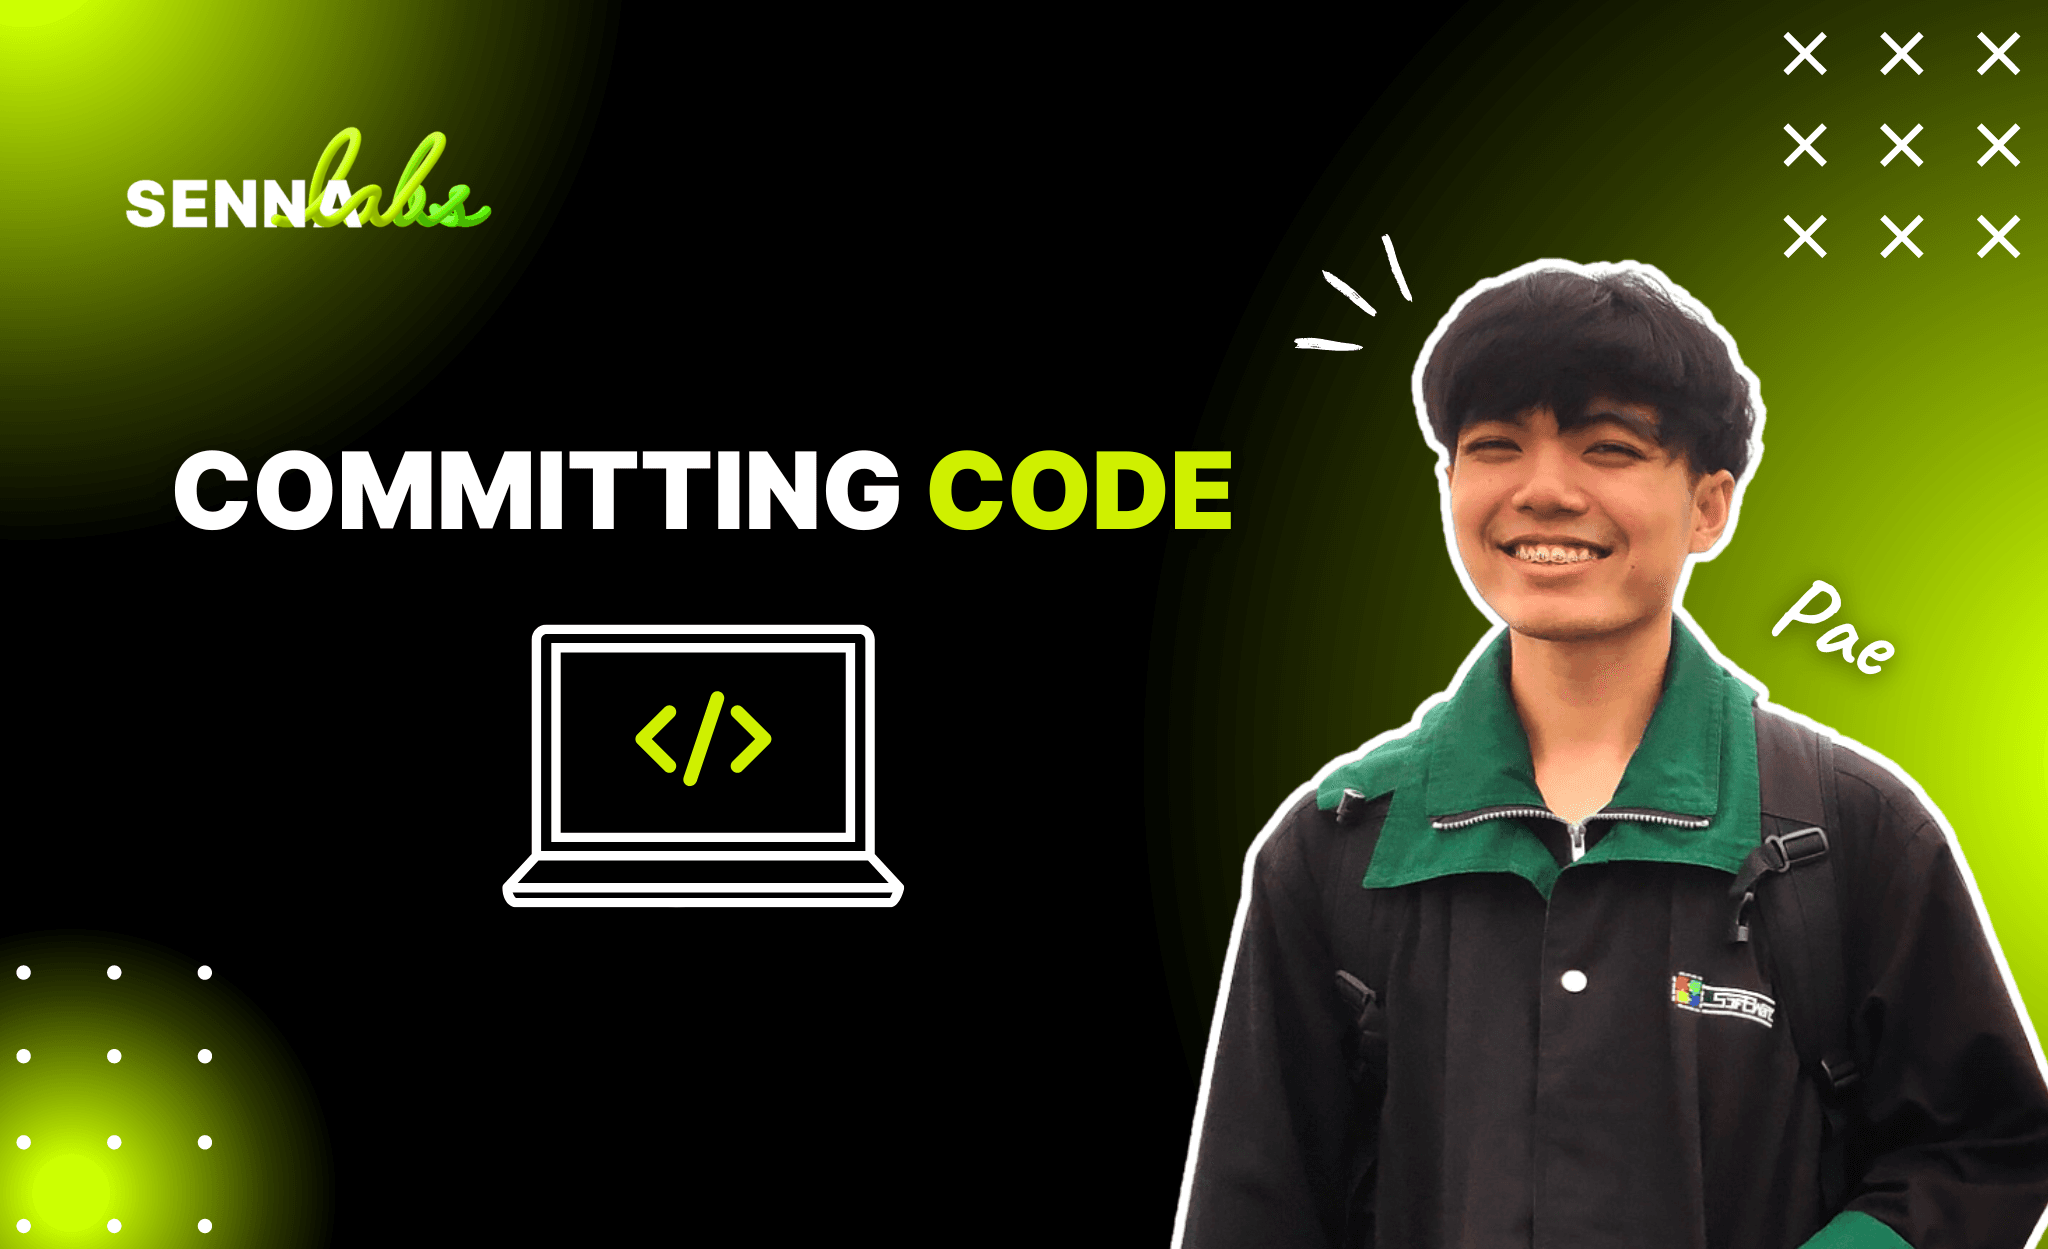 Committing Code